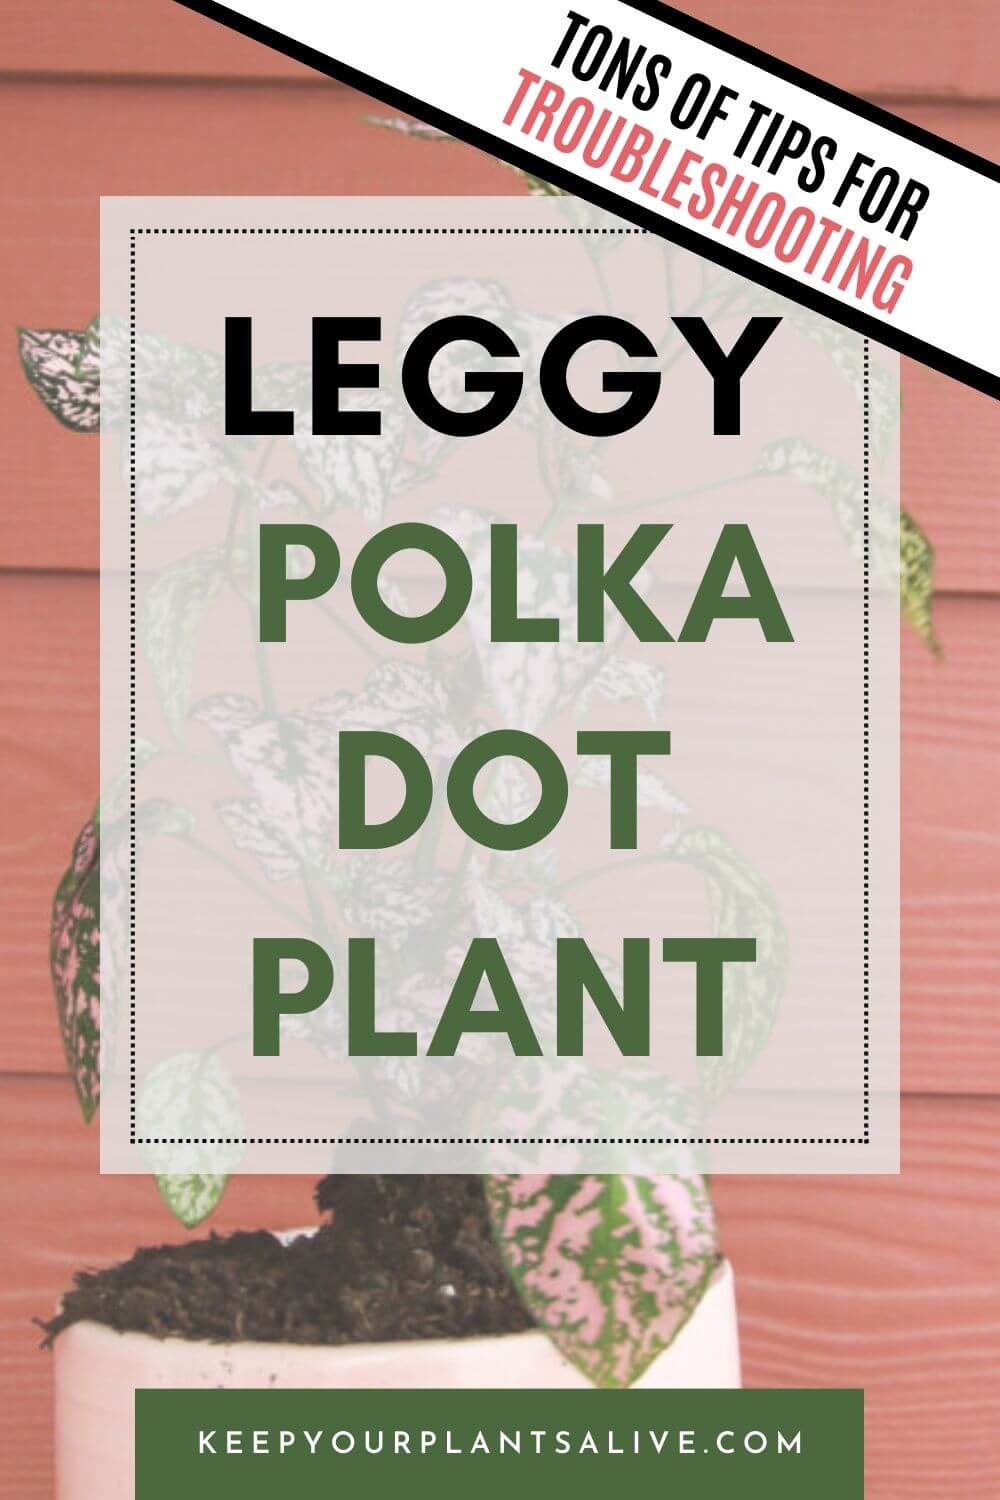 Leggy polka dot plant.